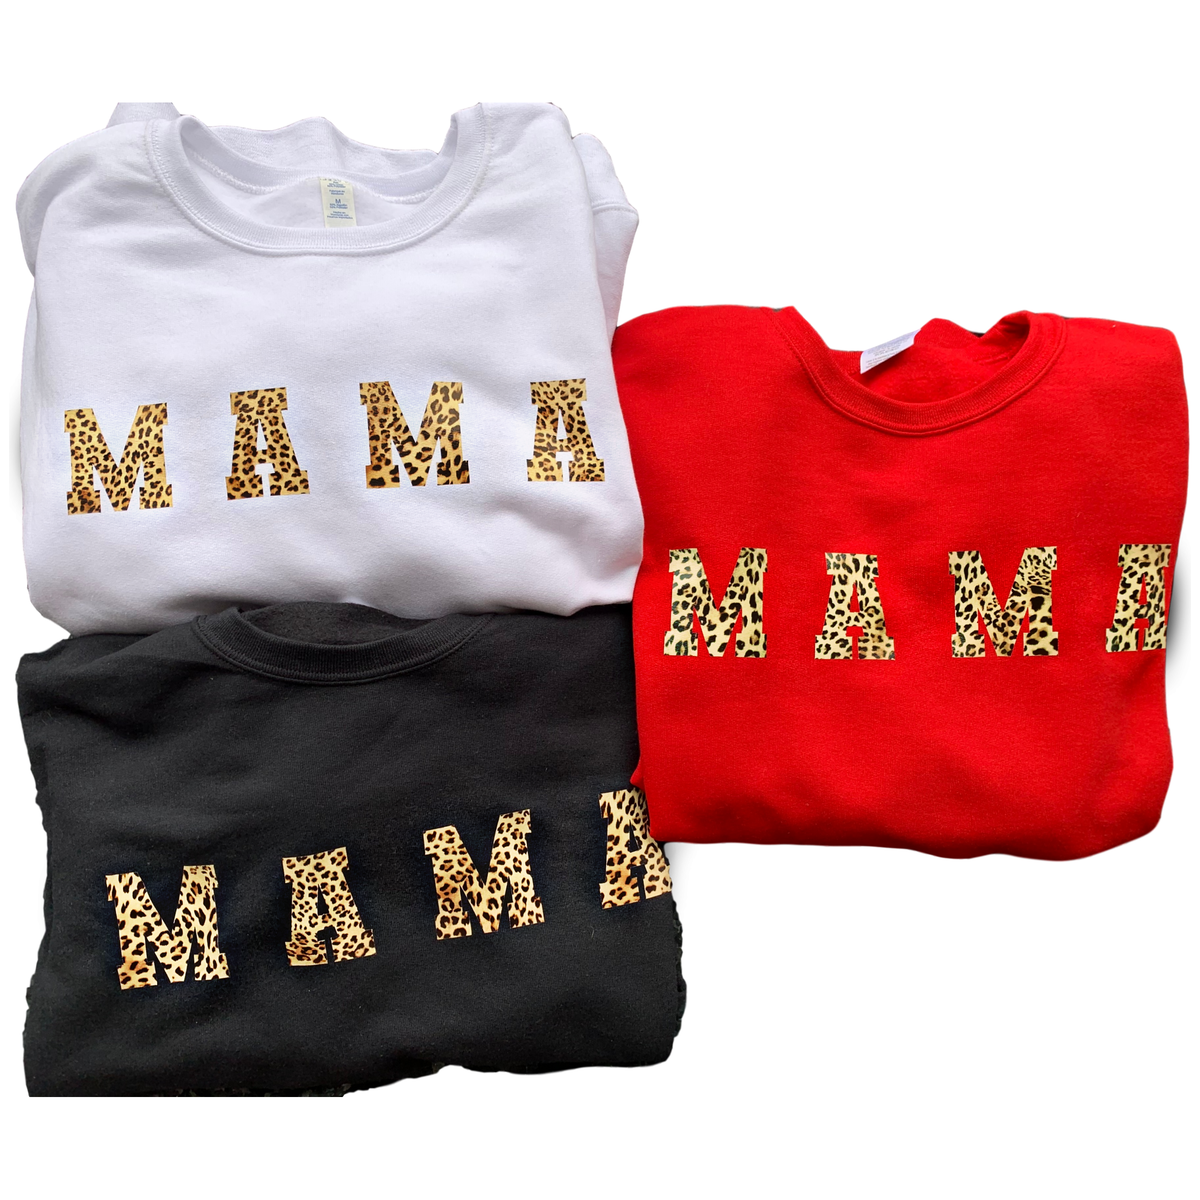 Wild Mama sweatshirt (more colors)